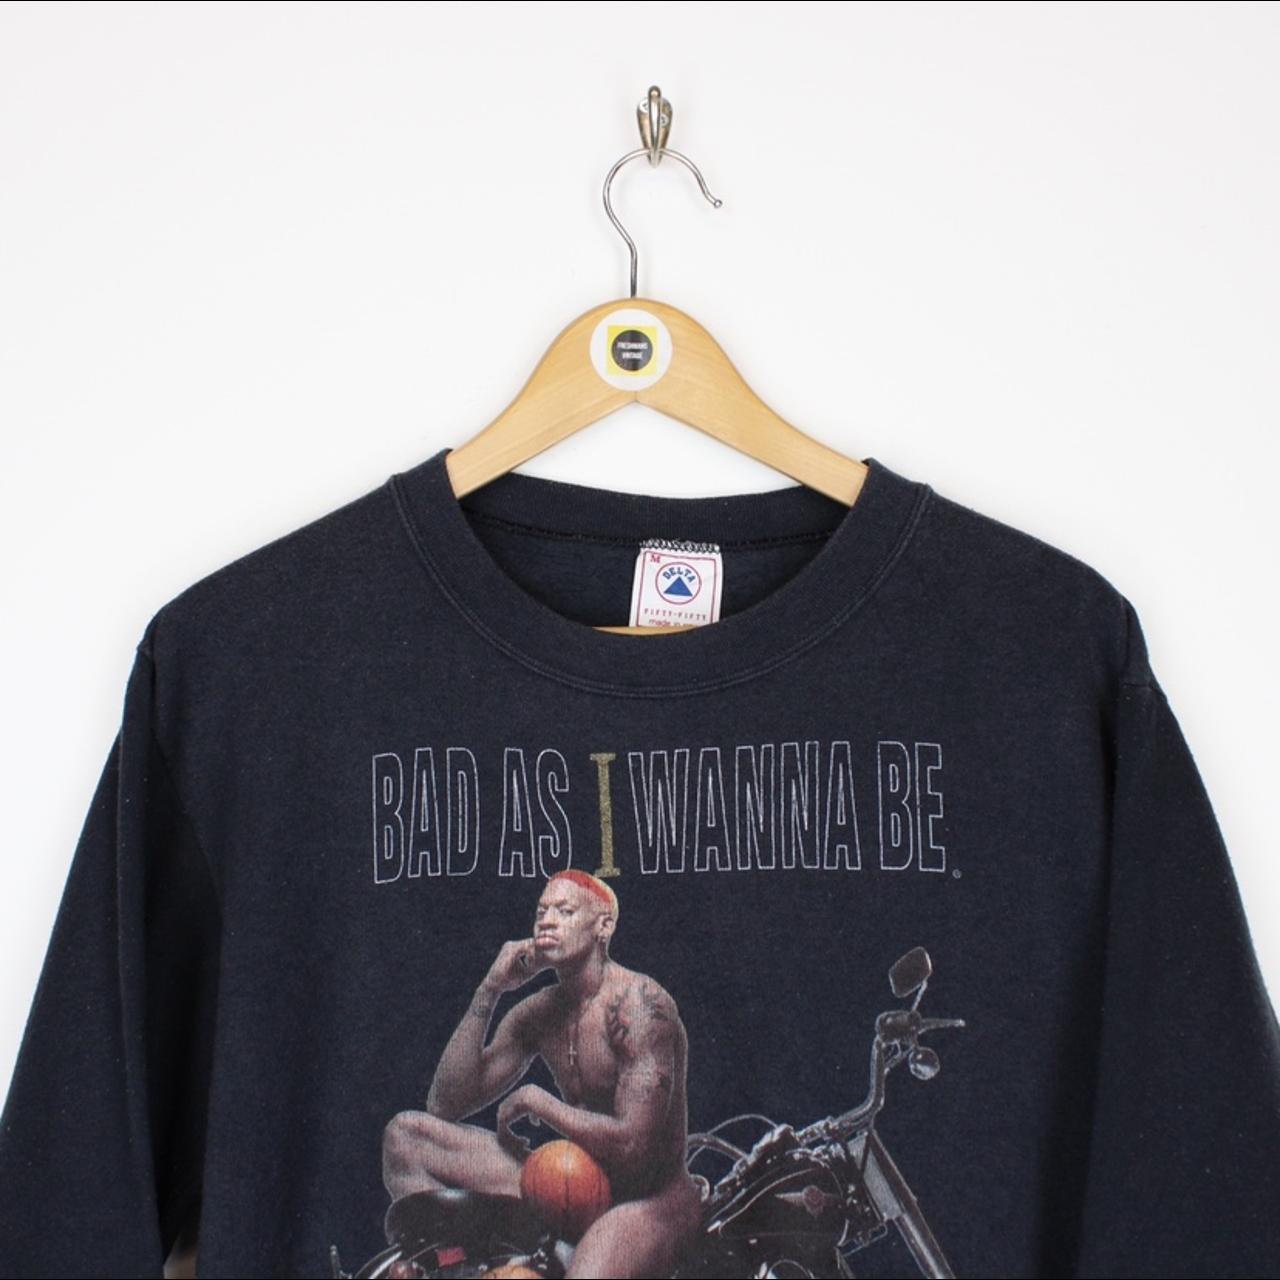 Rodman Brand Men's on Fire Crew Neck Sweatshirt in Washed Black - Size Medium